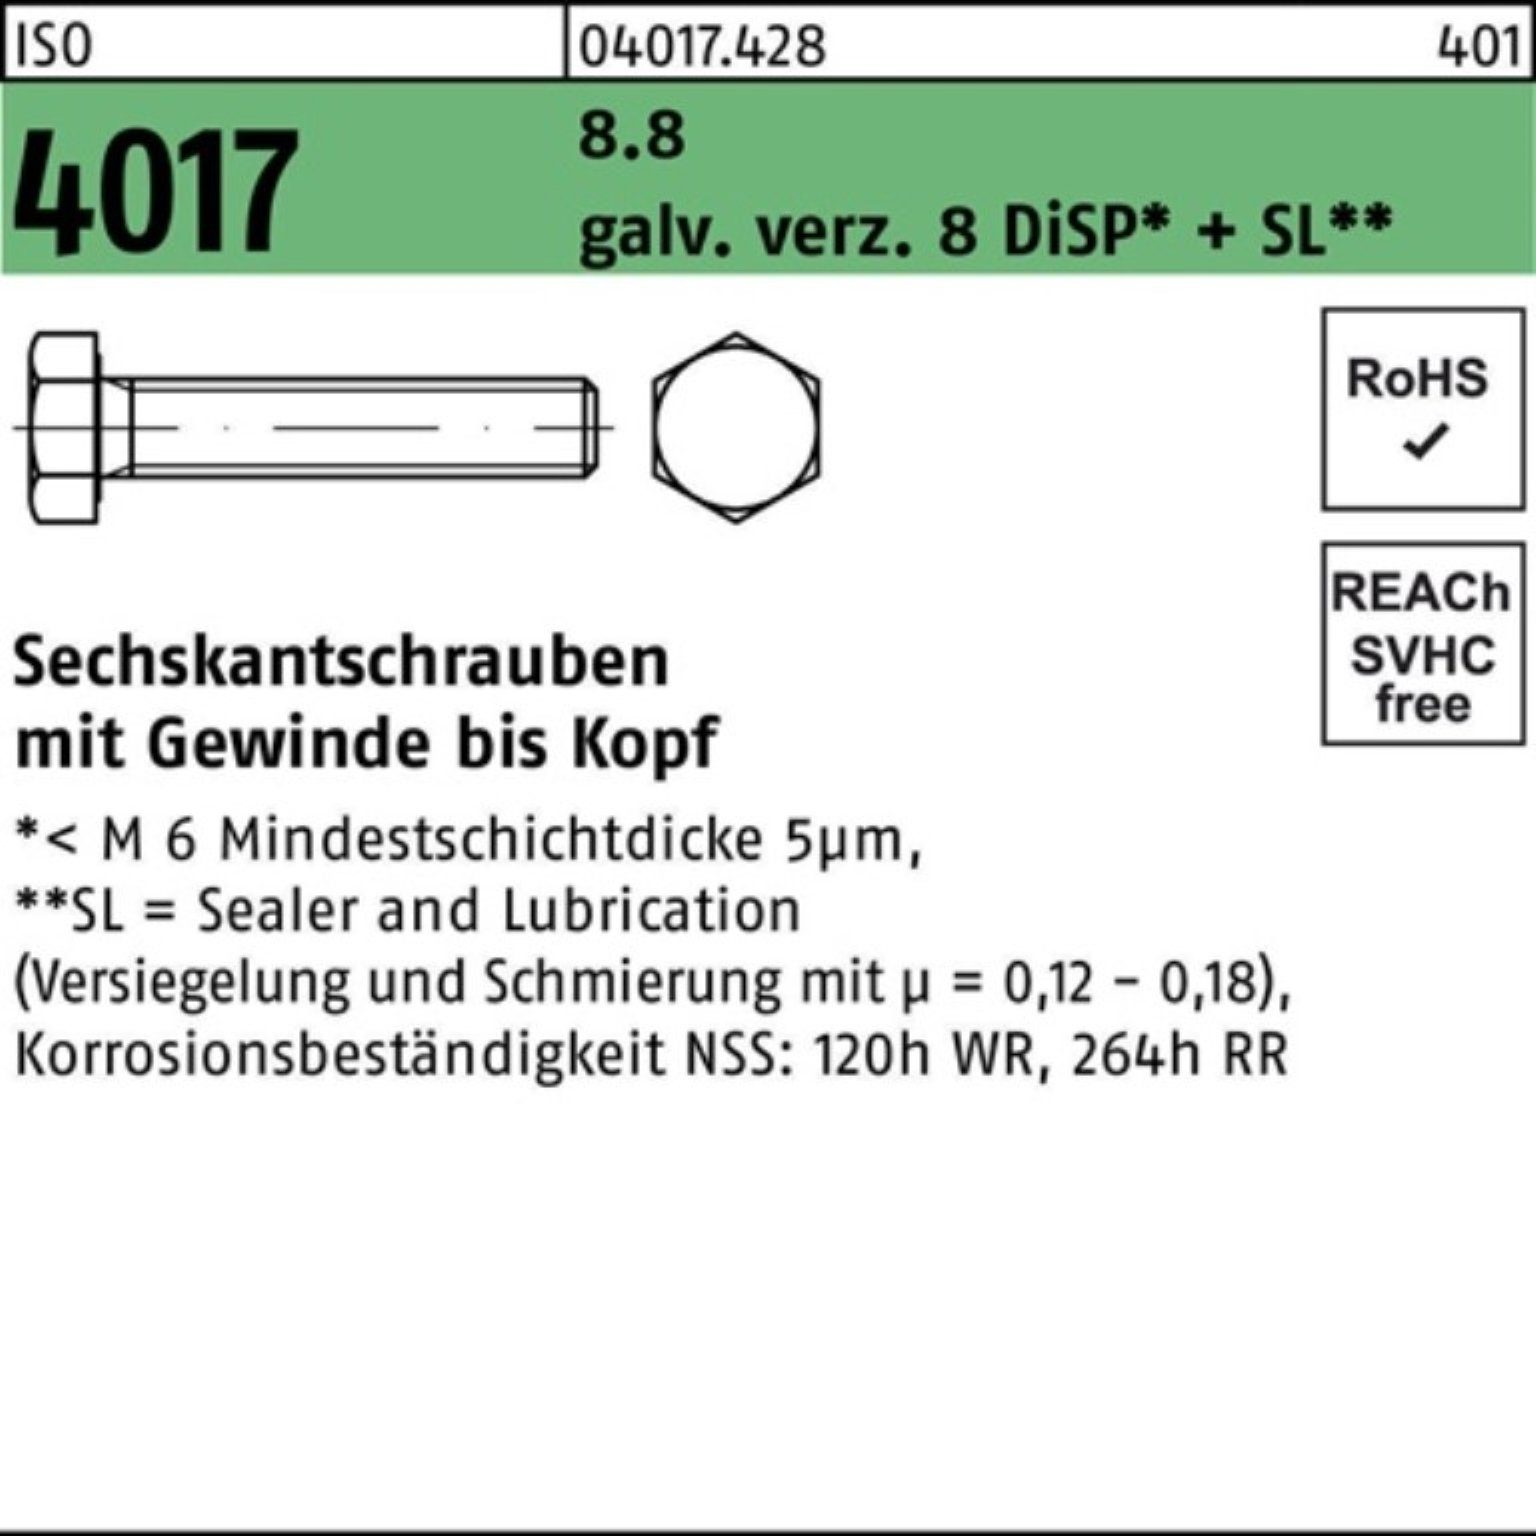 Bufab 100 100er M12x Sechskantschraube DiS Pack Sechskantschraube 8.8 galv.verz. 4017 8 ISO VG